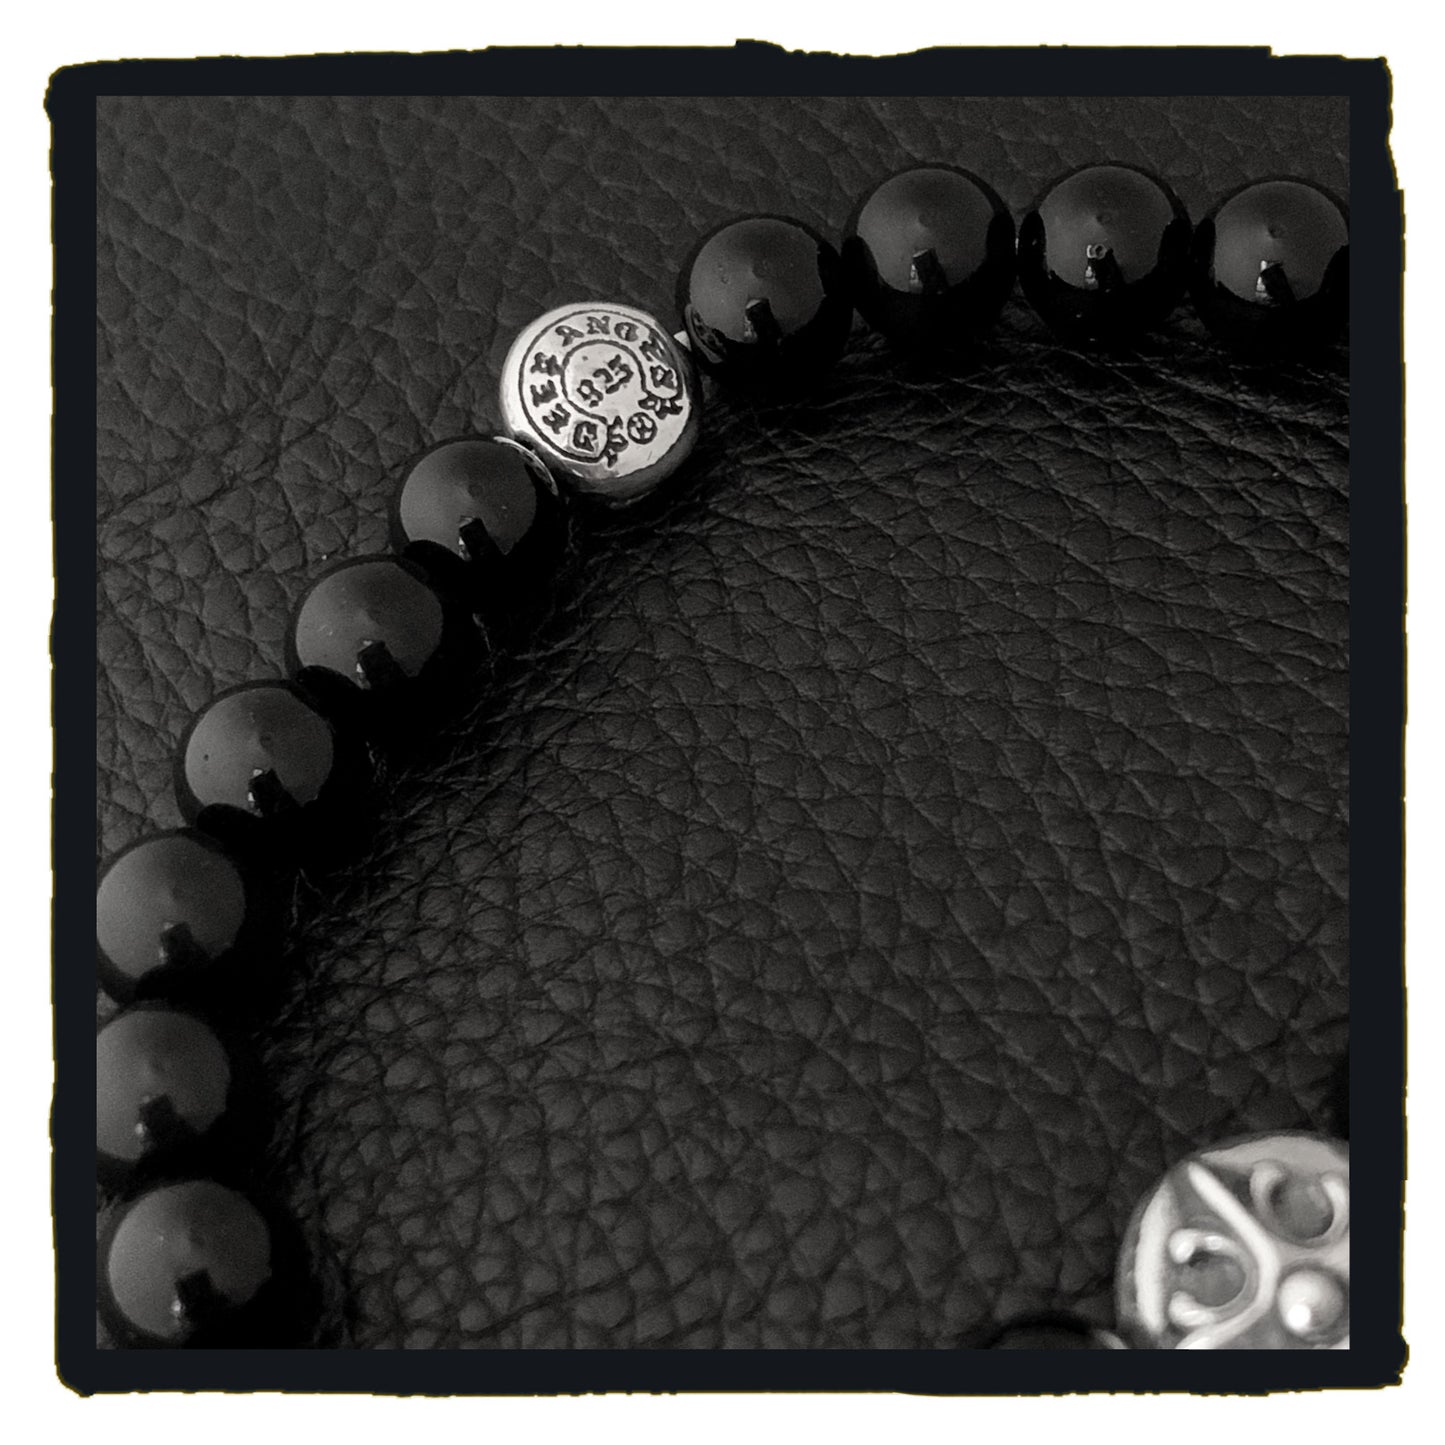 01-b0061blon11 rt beads bracelet-crown